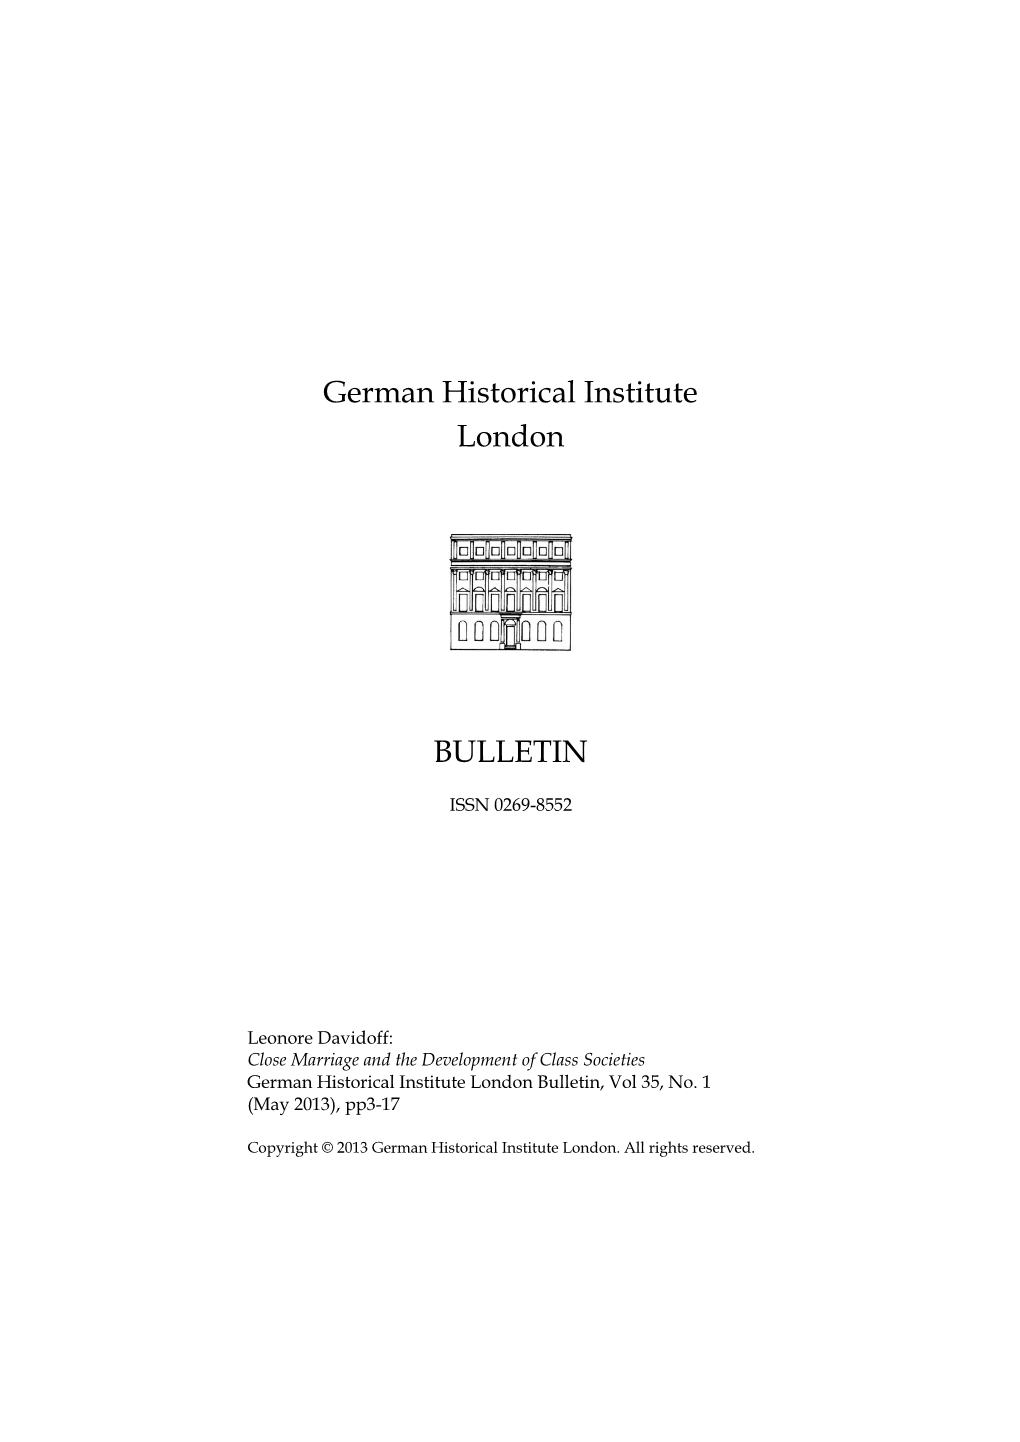 German Historical Institute London Bulletin, Vol 35, No